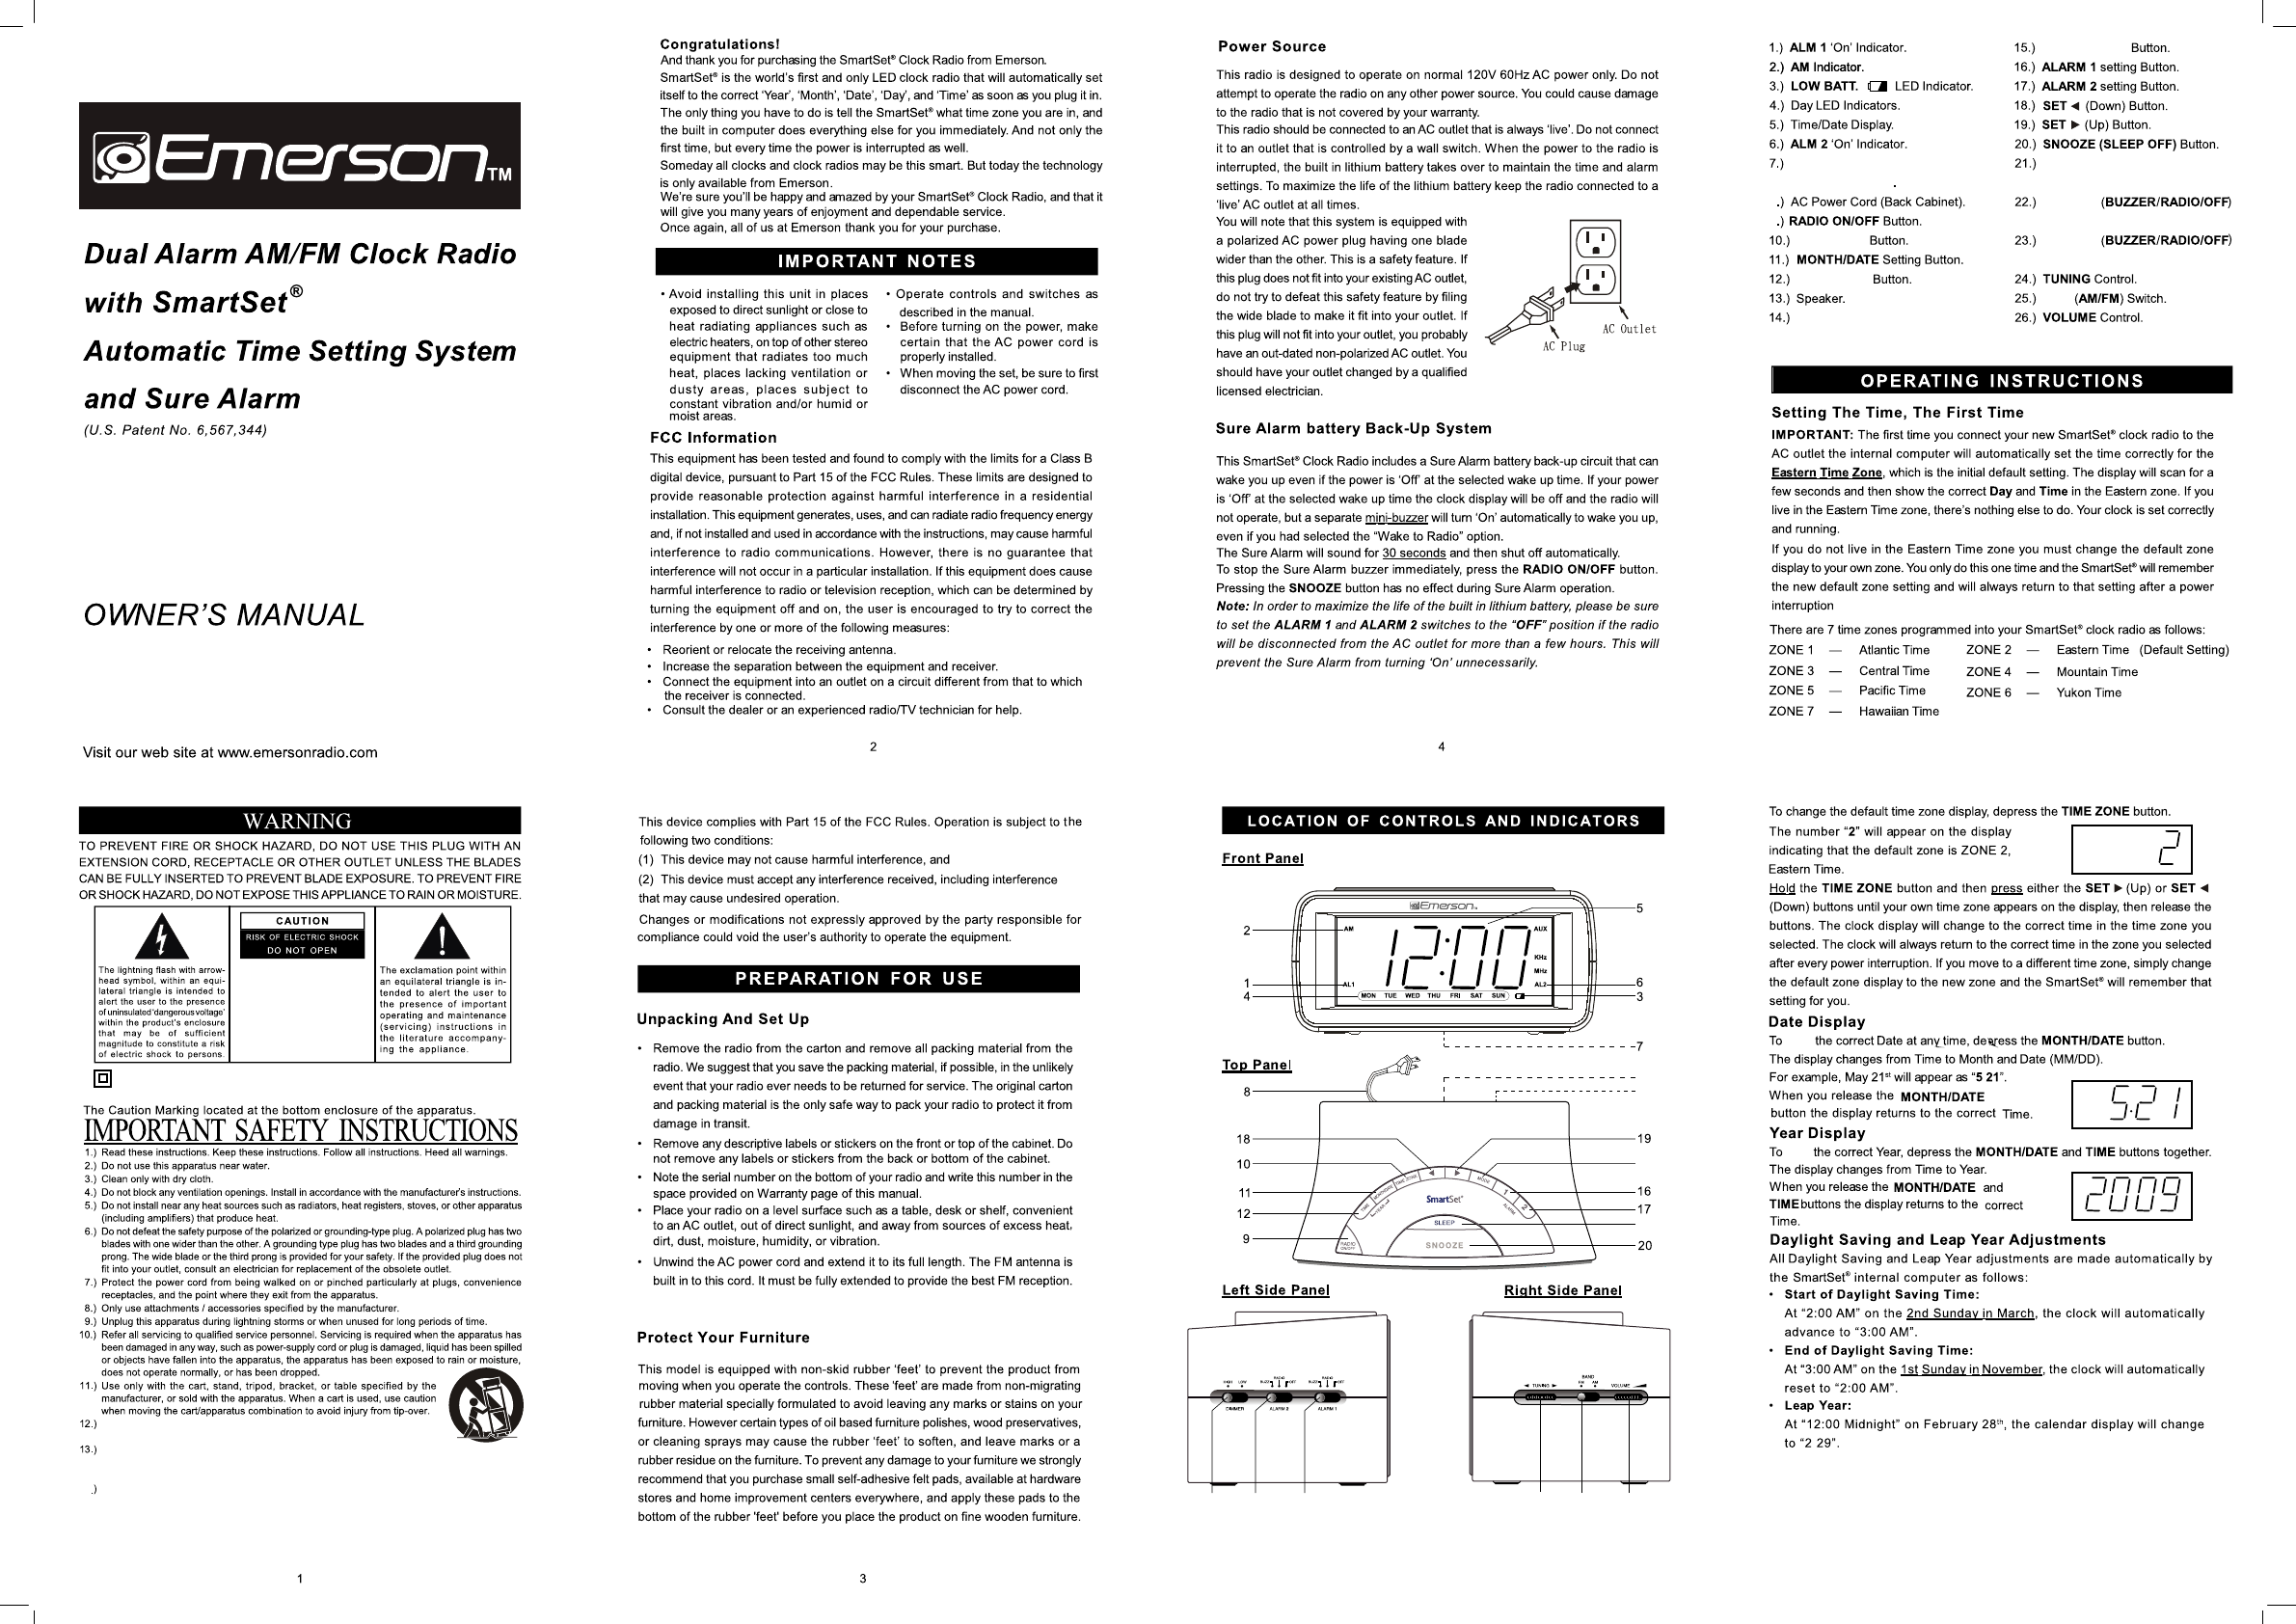 emerson smart set cks1507 manual